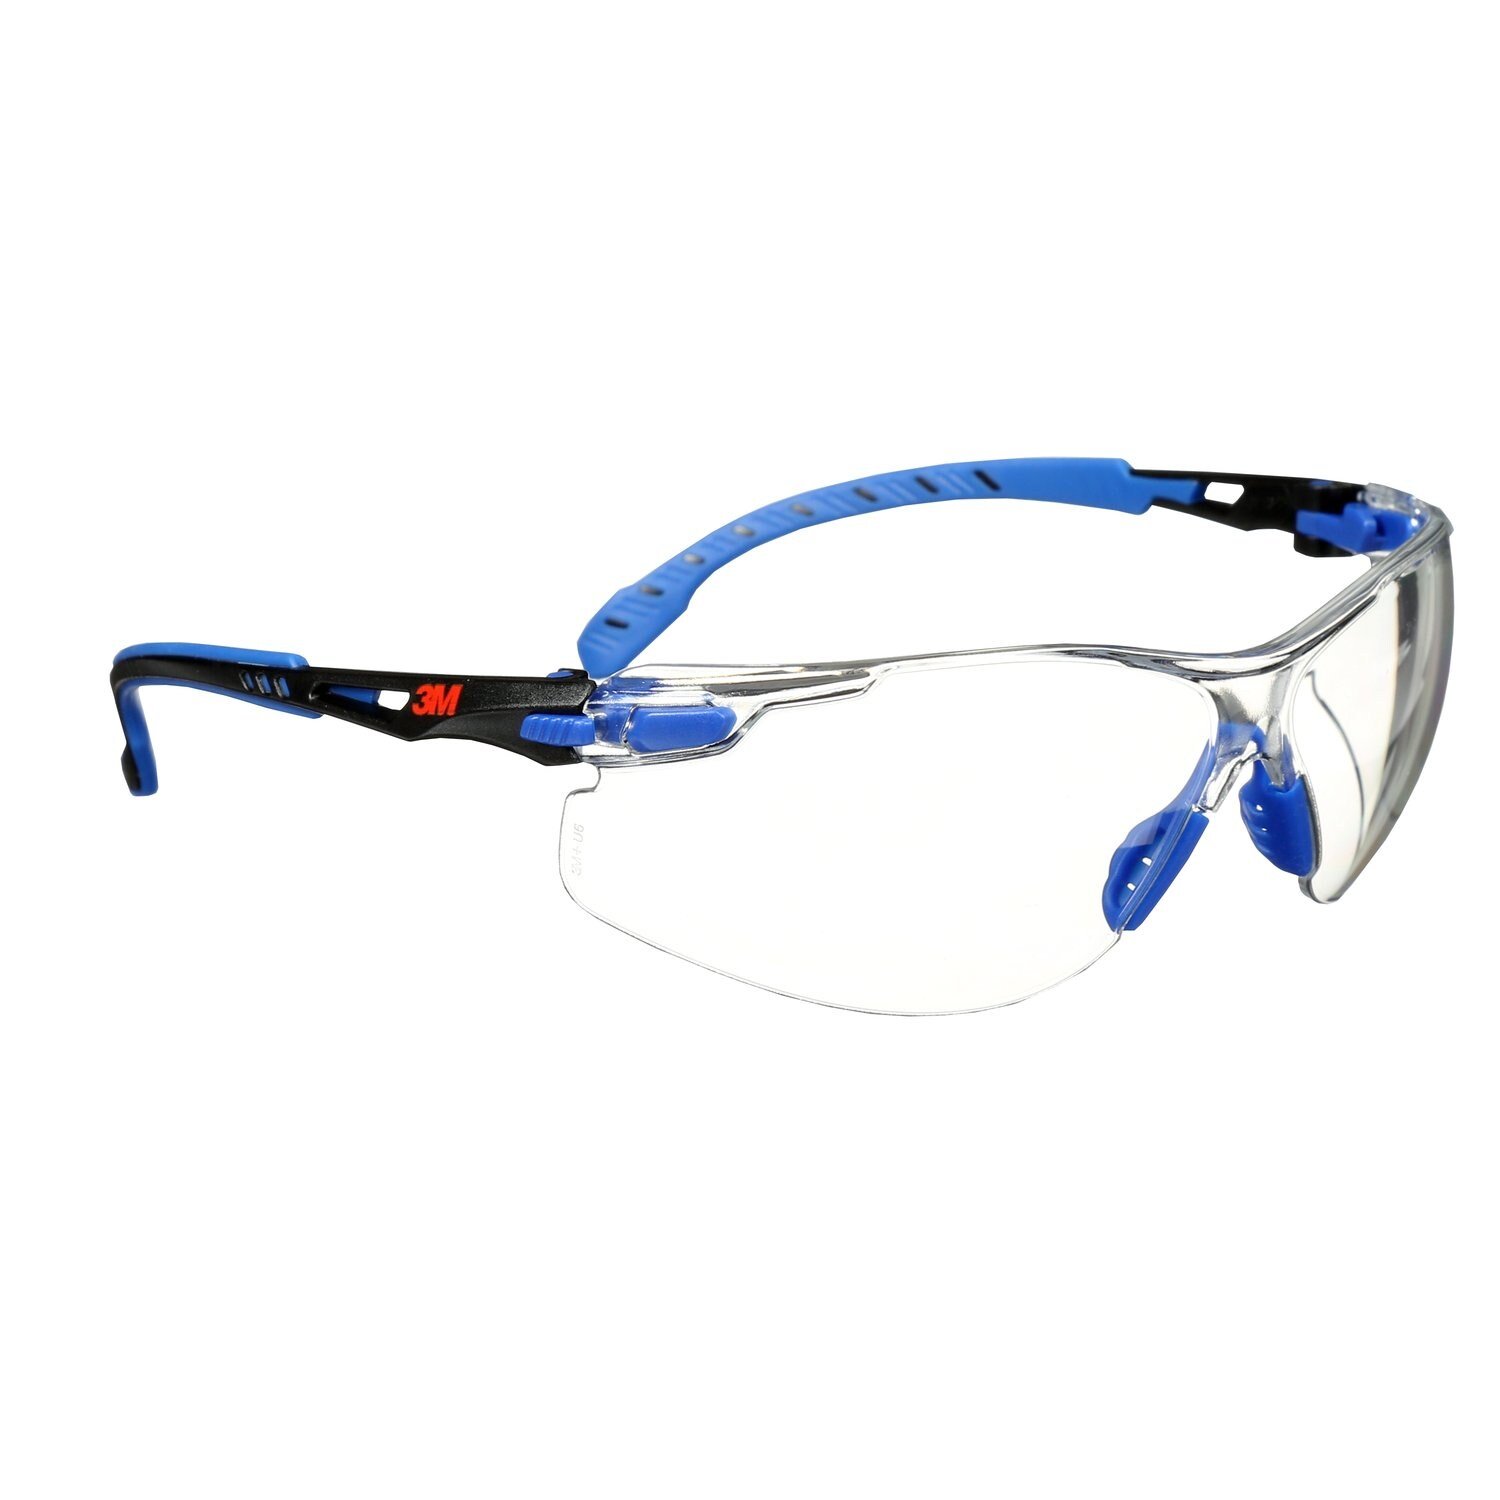 7100079183 - 3M Solus 1000-Series Safety Glasses S1101SGAF, Black/Blue, Clear
Scotchgard Anti-Fog Lens, 20 EA/Case